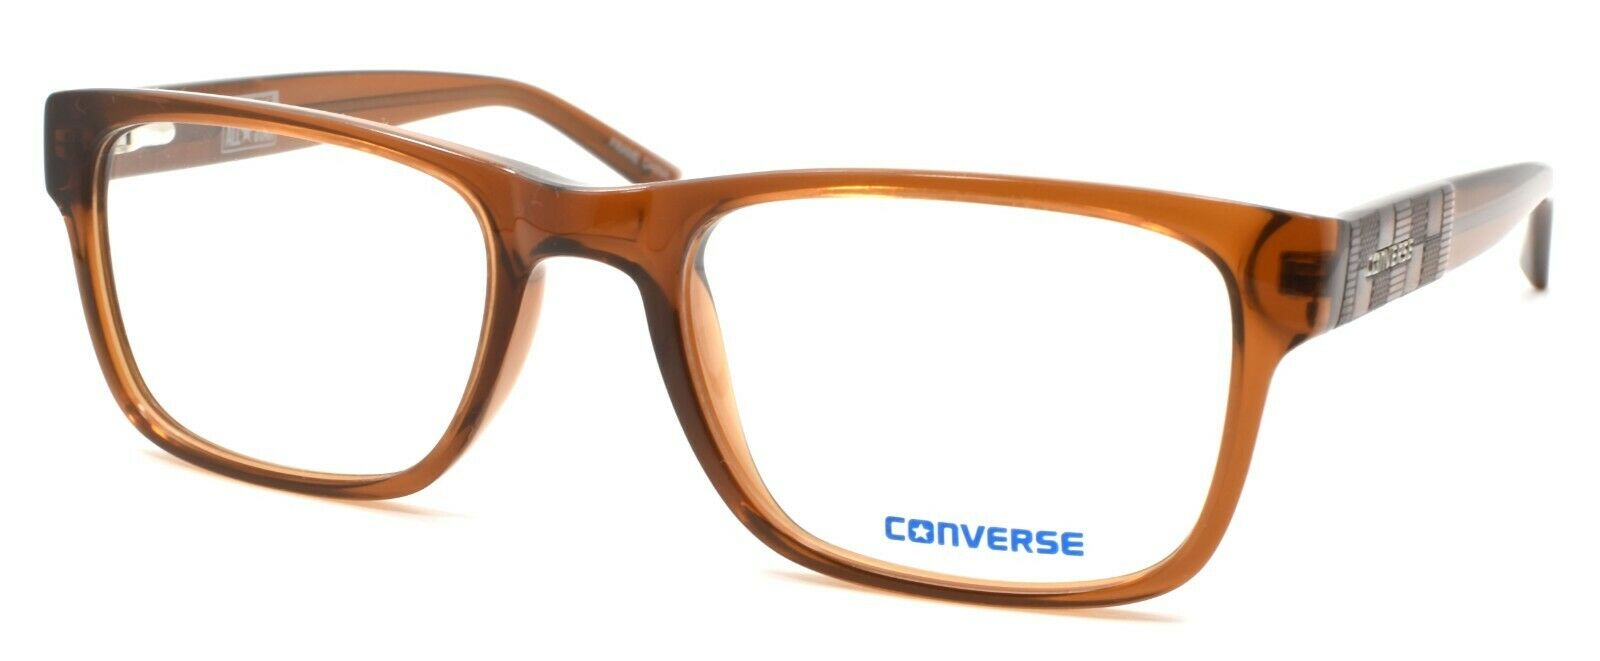 1-CONVERSE Q042 Men's Eyeglasses Frames 52-19-135 Brown + CASE-751286280401-IKSpecs